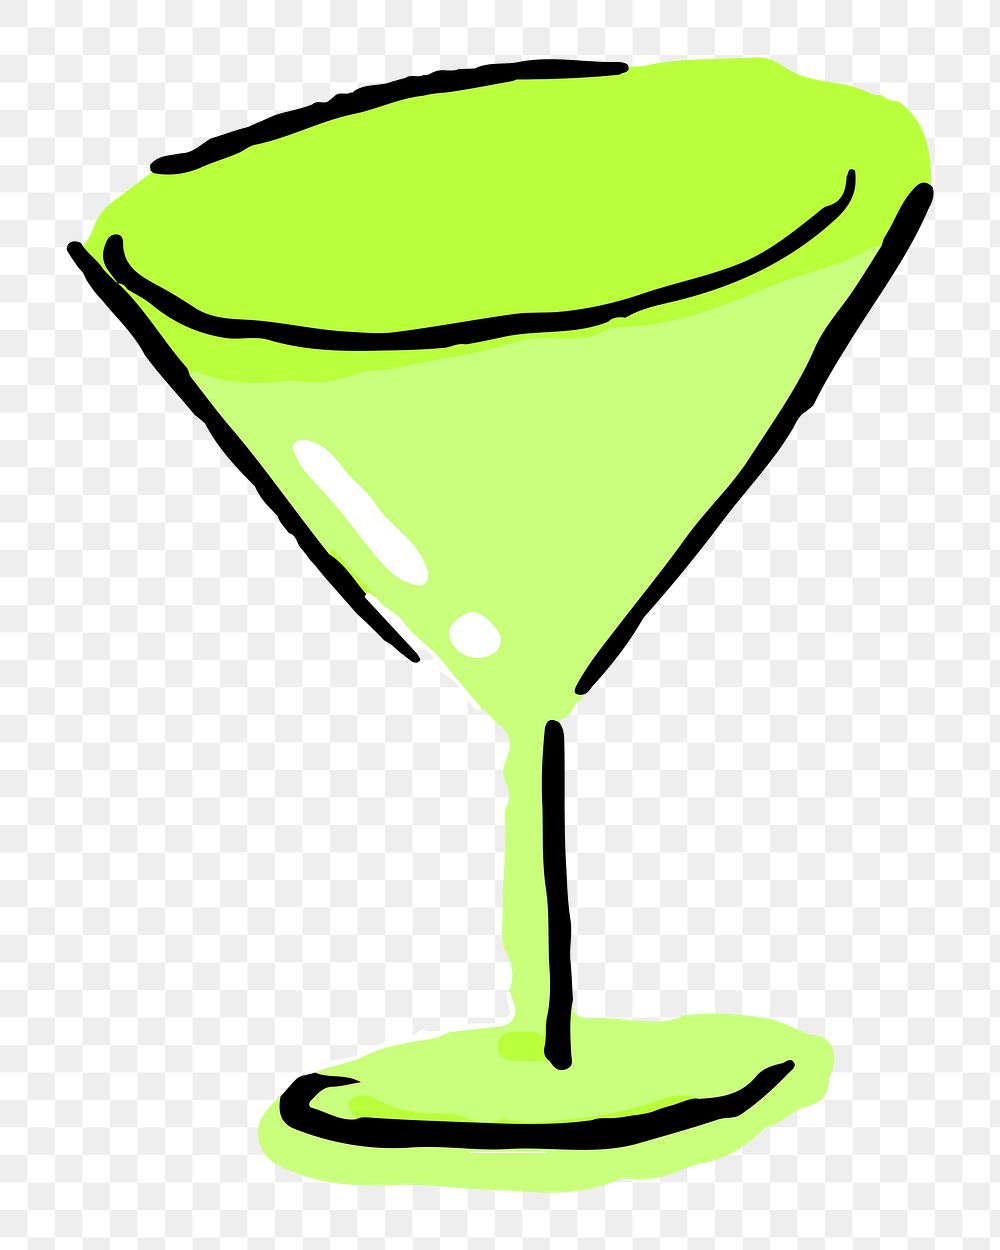 Neon green cocktail png sticker illustration, transparent background